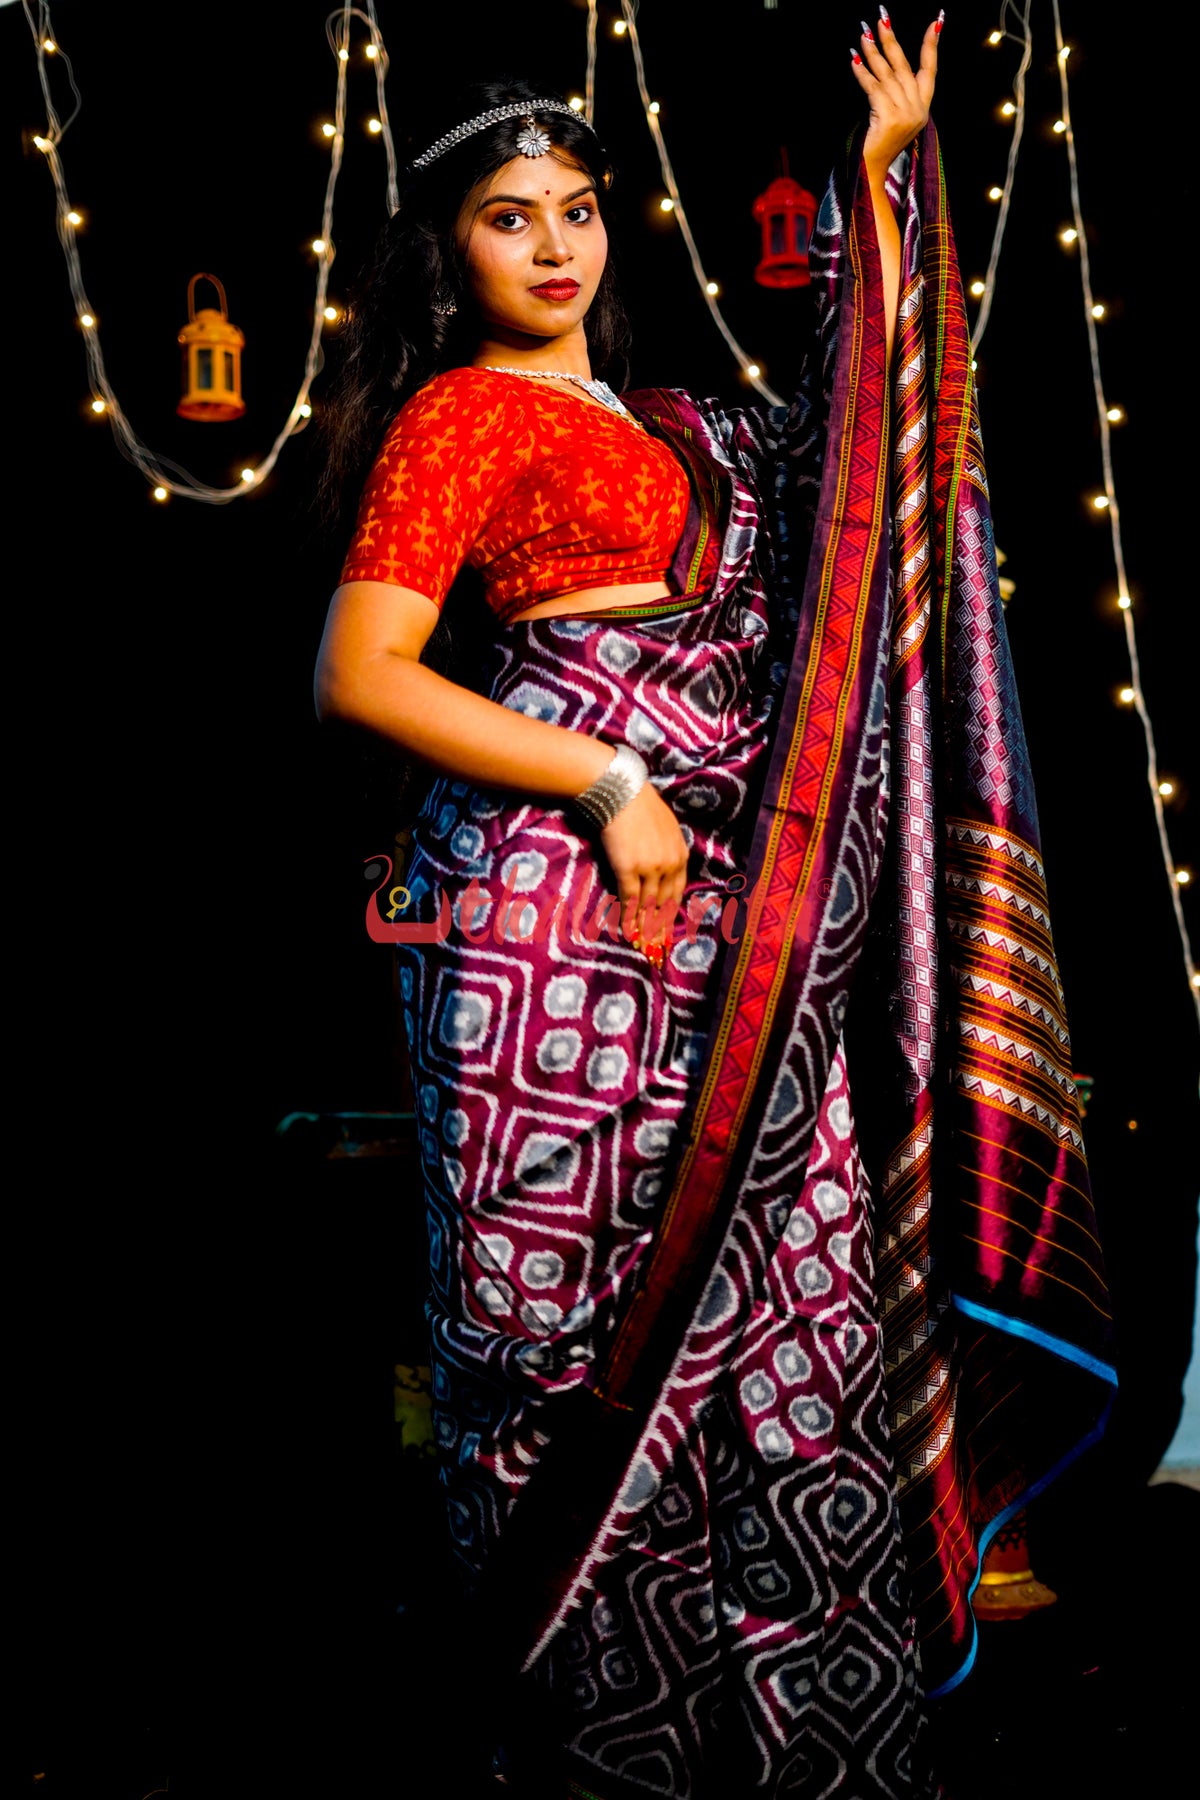 Man Woman Maharashtra Traditional Dress and Images